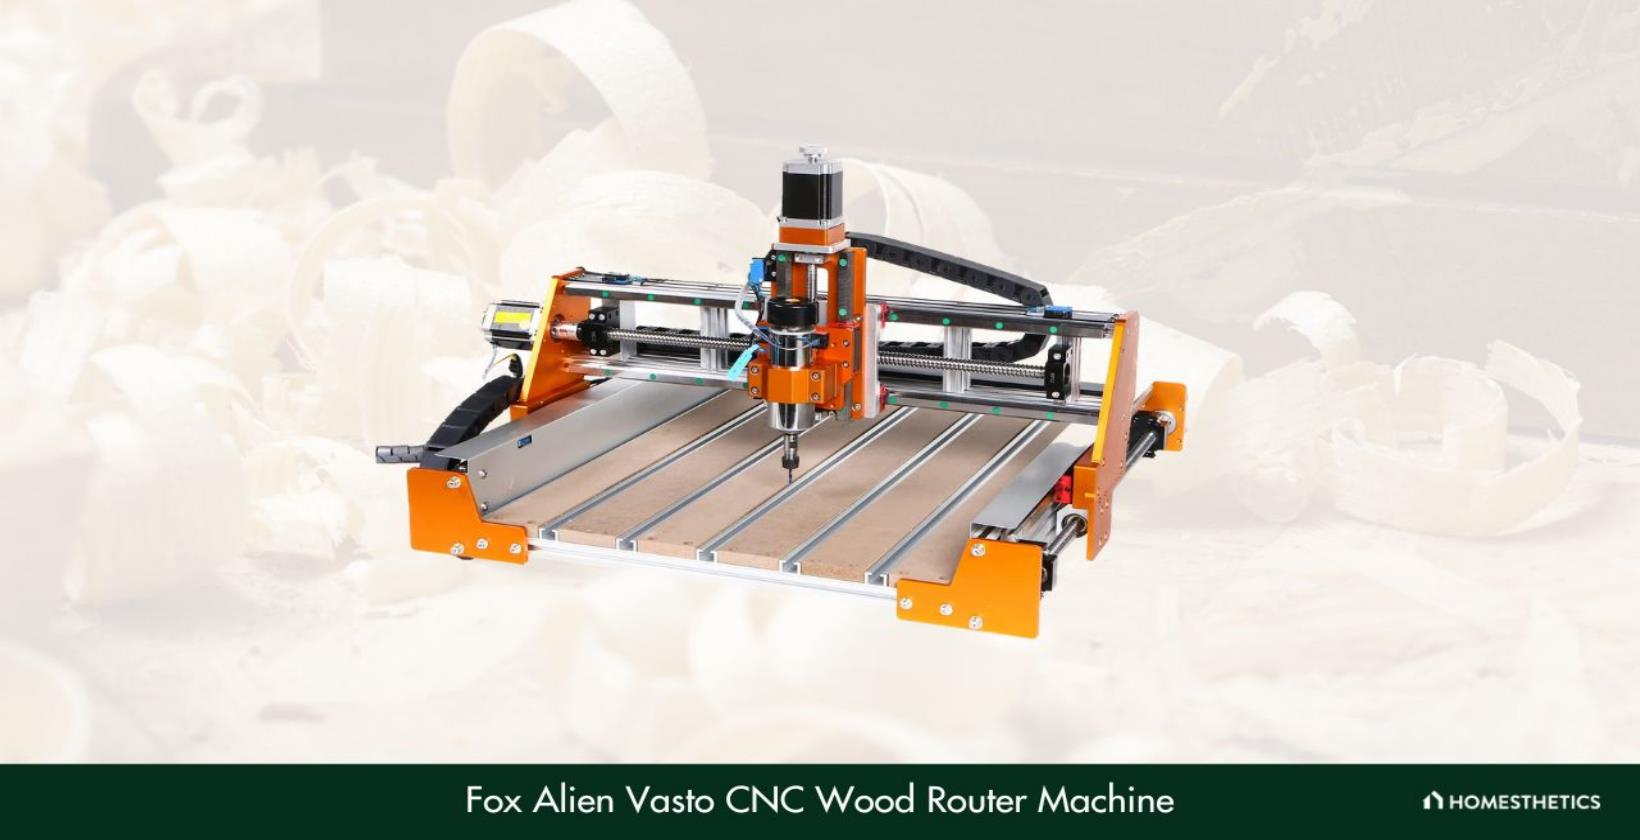 8. Fox Alien Vasto CNC Wood Router Machine